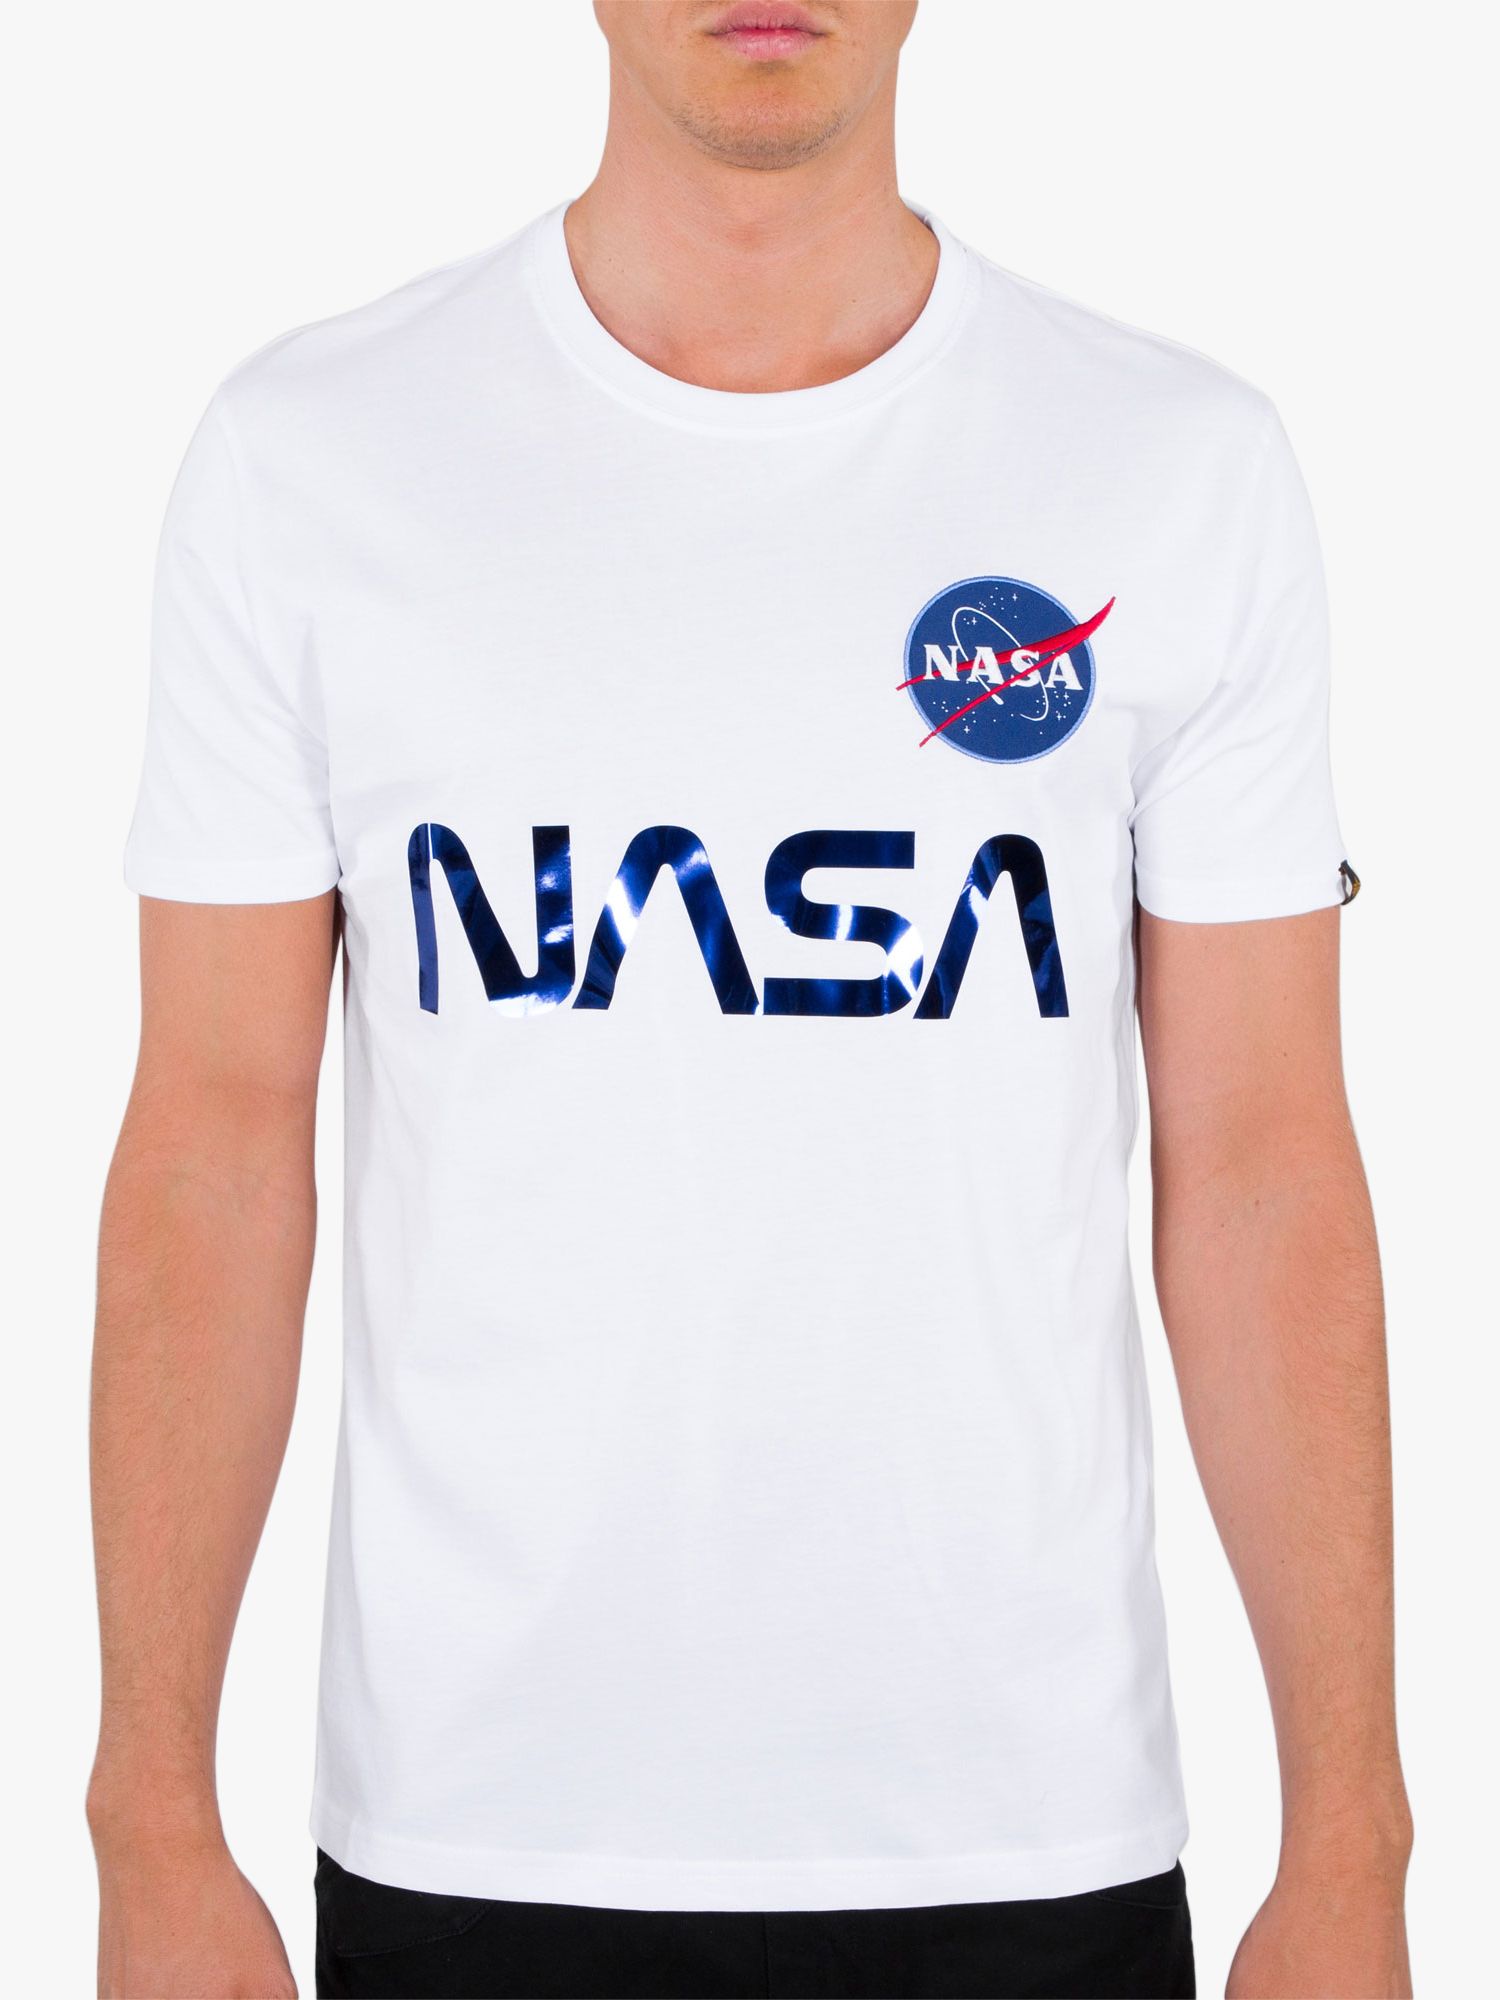 Alpha Industries 90 X Crew Logo Partners Reflective Neck John at Lewis White/Blue NASA T-Shirt, 